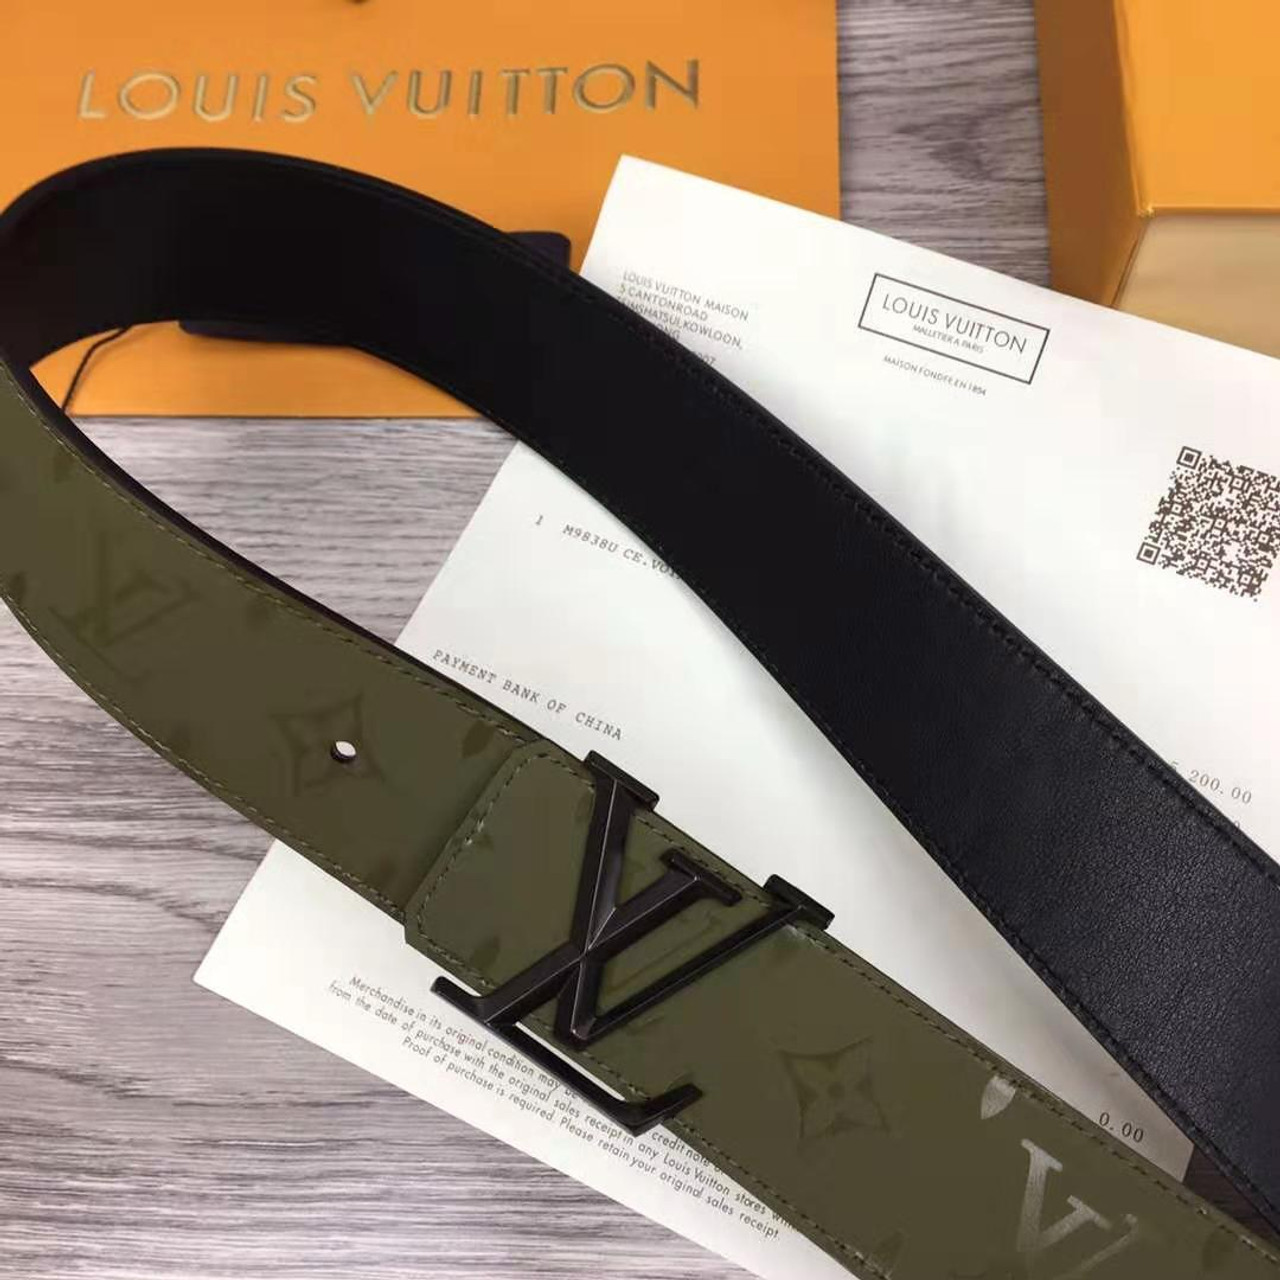 UA Replica Supreme X Louis Vuitton (LV) Belt in RED, BROWN AND